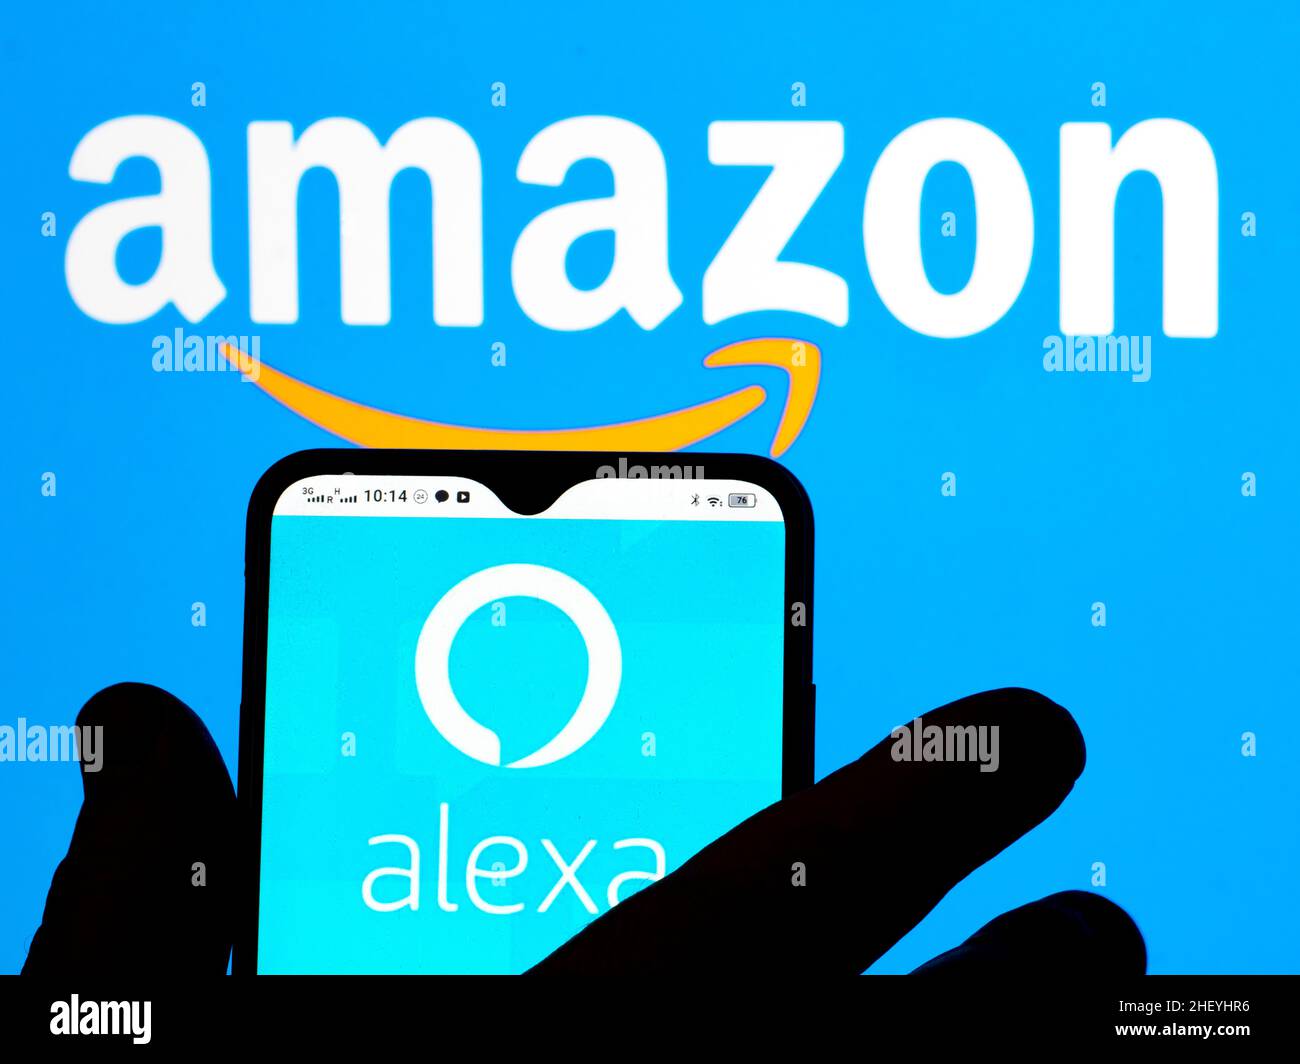 Amazon alexa logo hi-res stock photography and images - Alamy